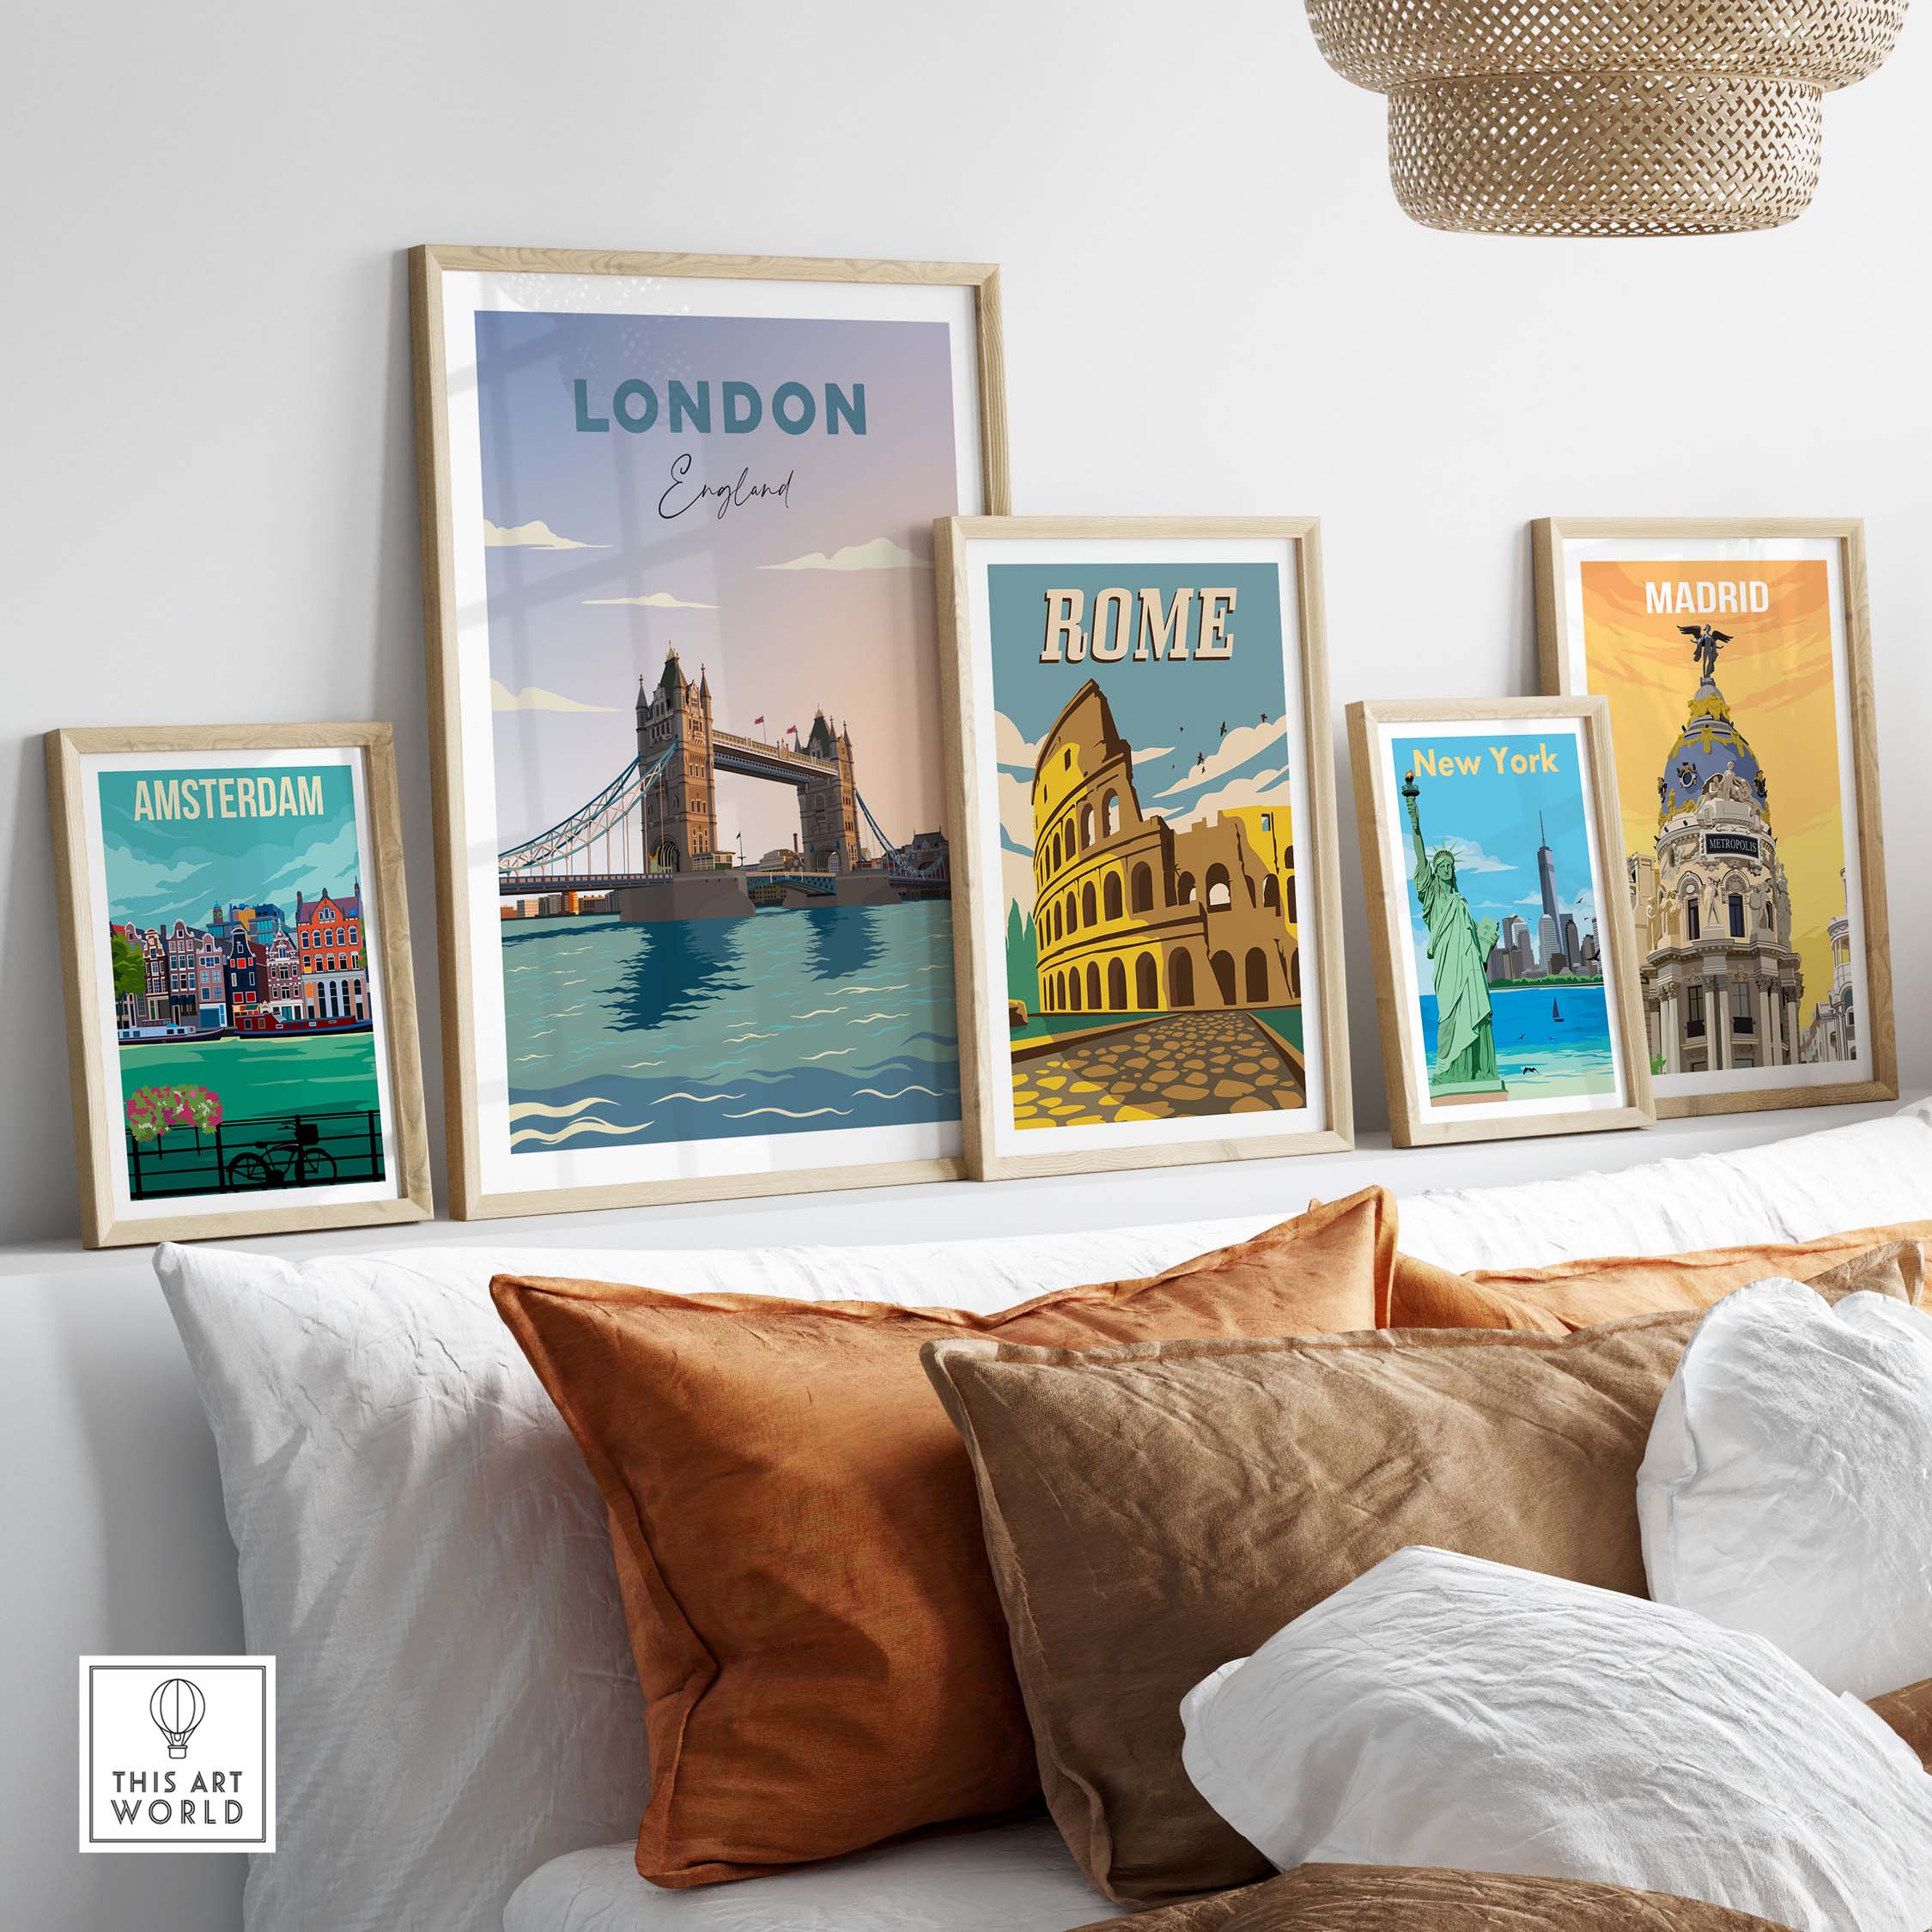 London Travel Poster Print | This Art World